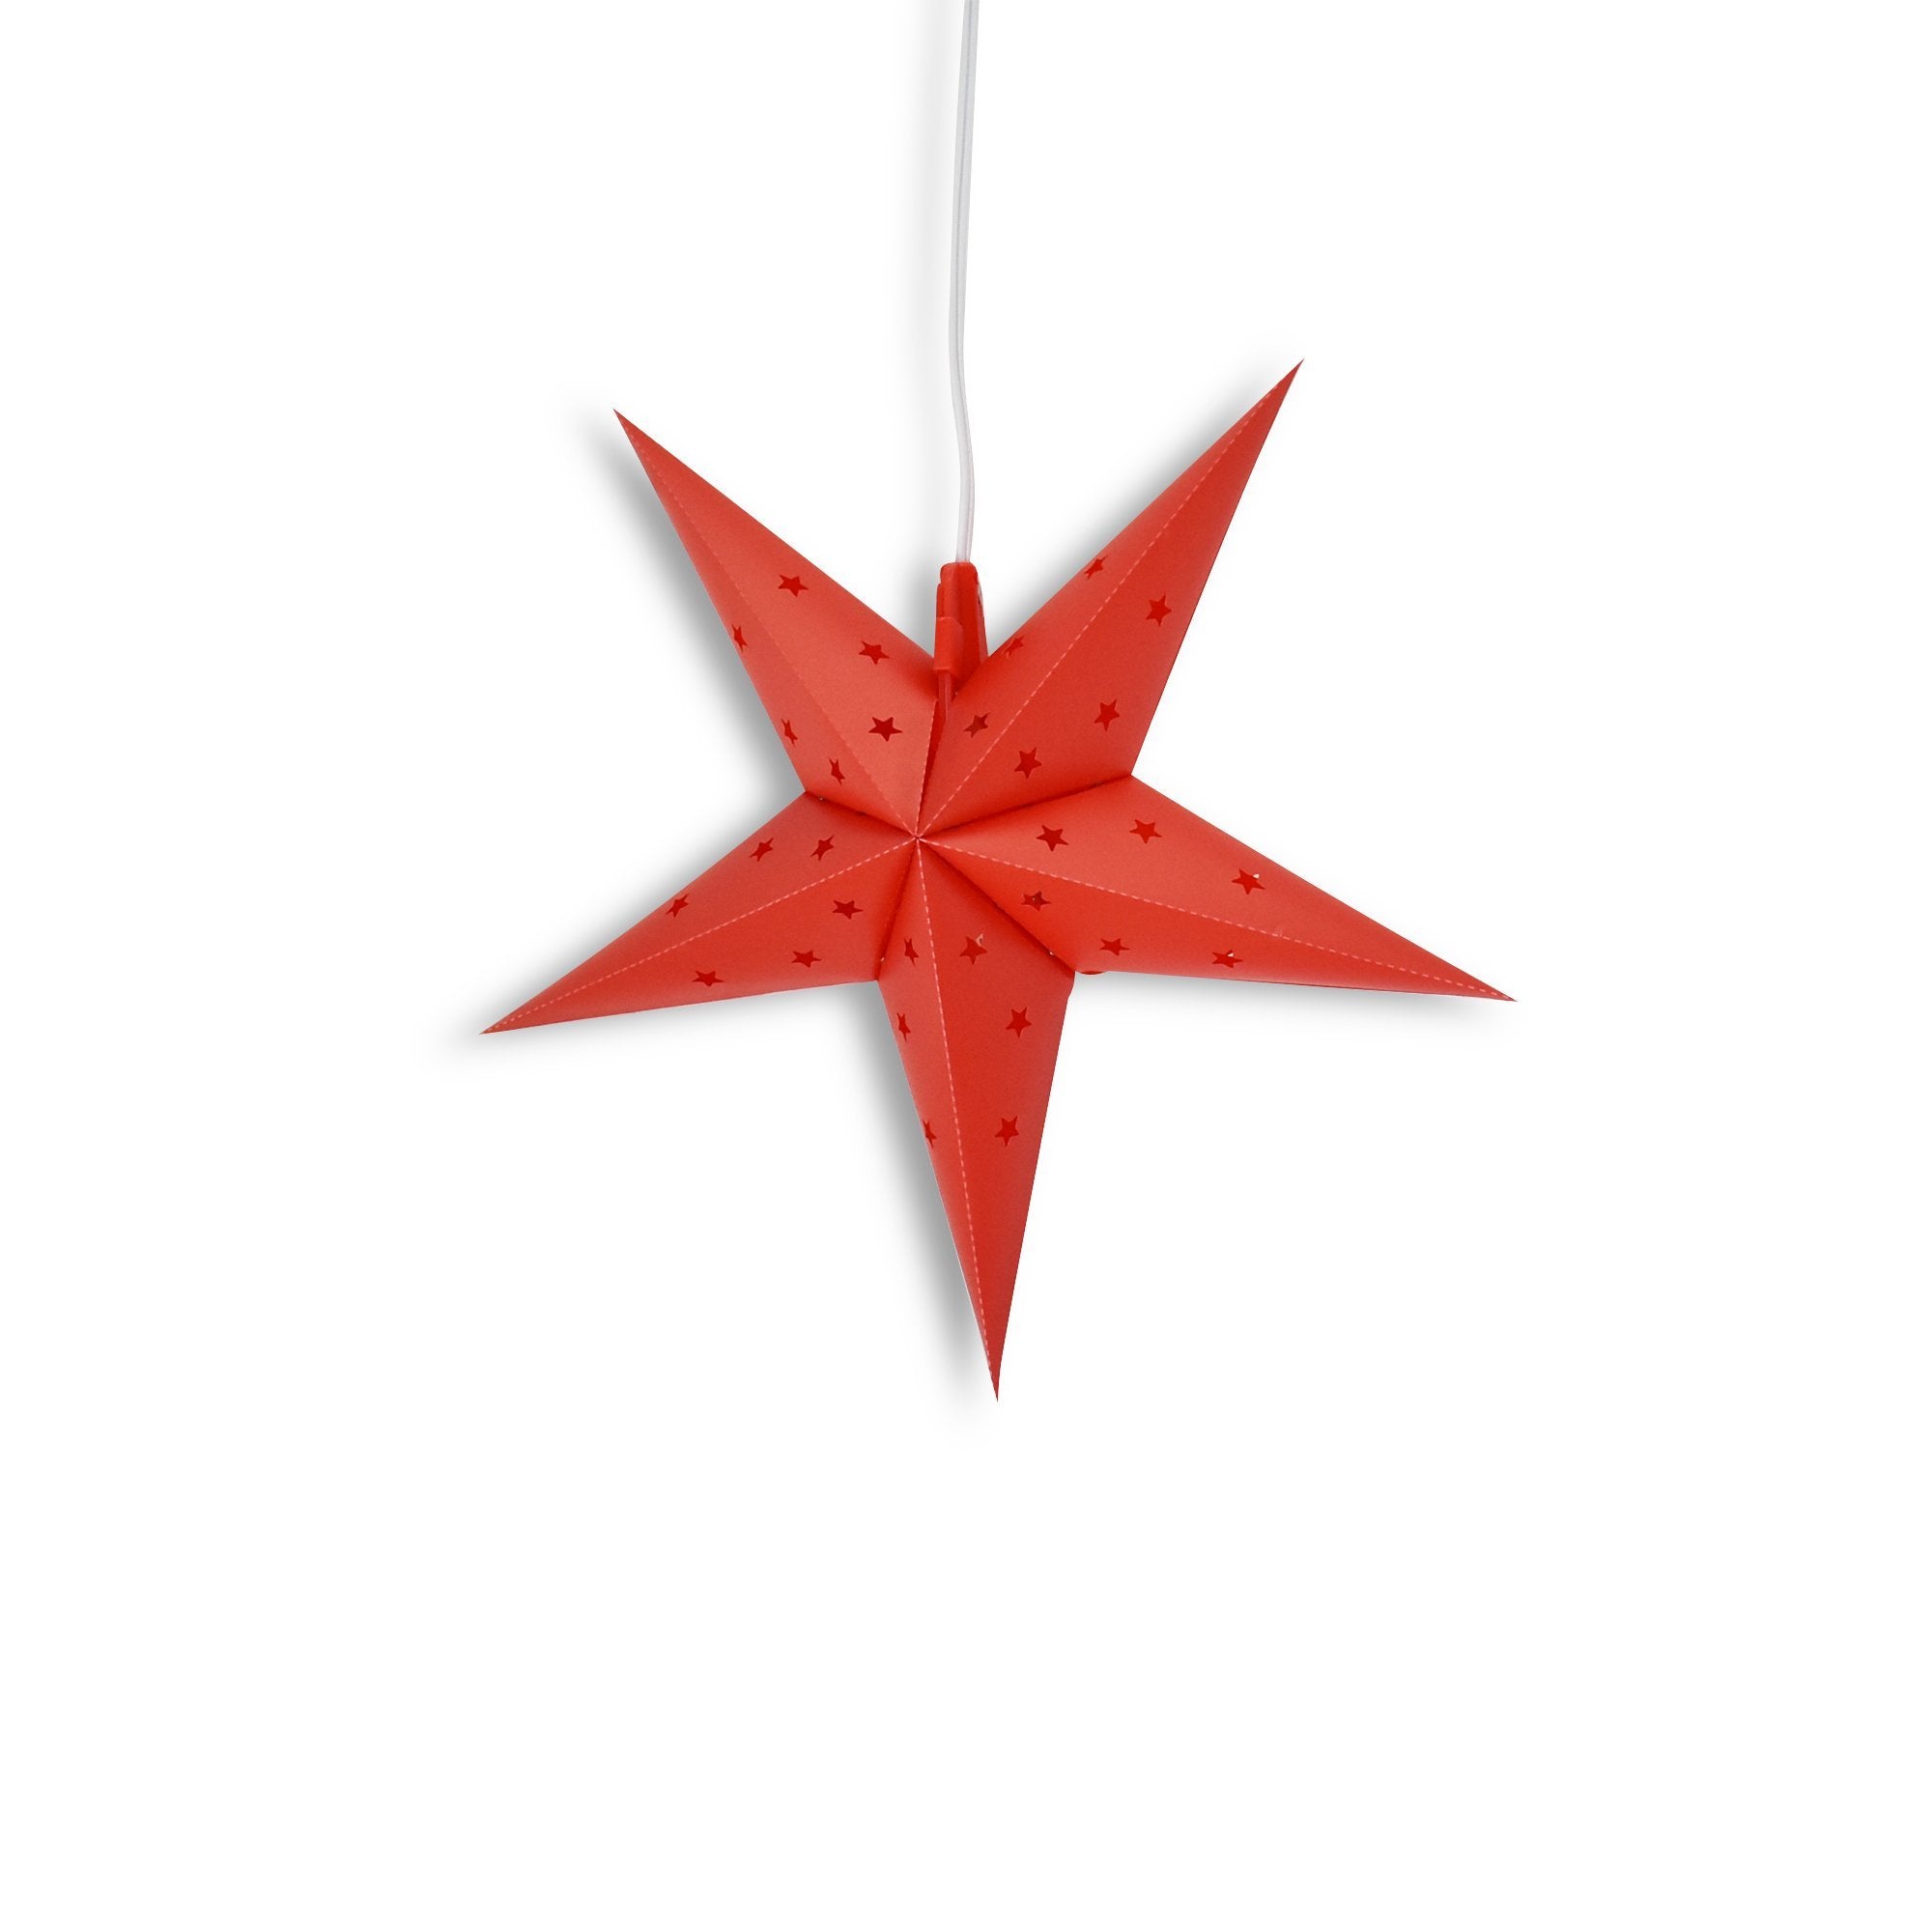 15" Red Weatherproof Star Lantern Lamp, Hanging Decoration (Shade Only)